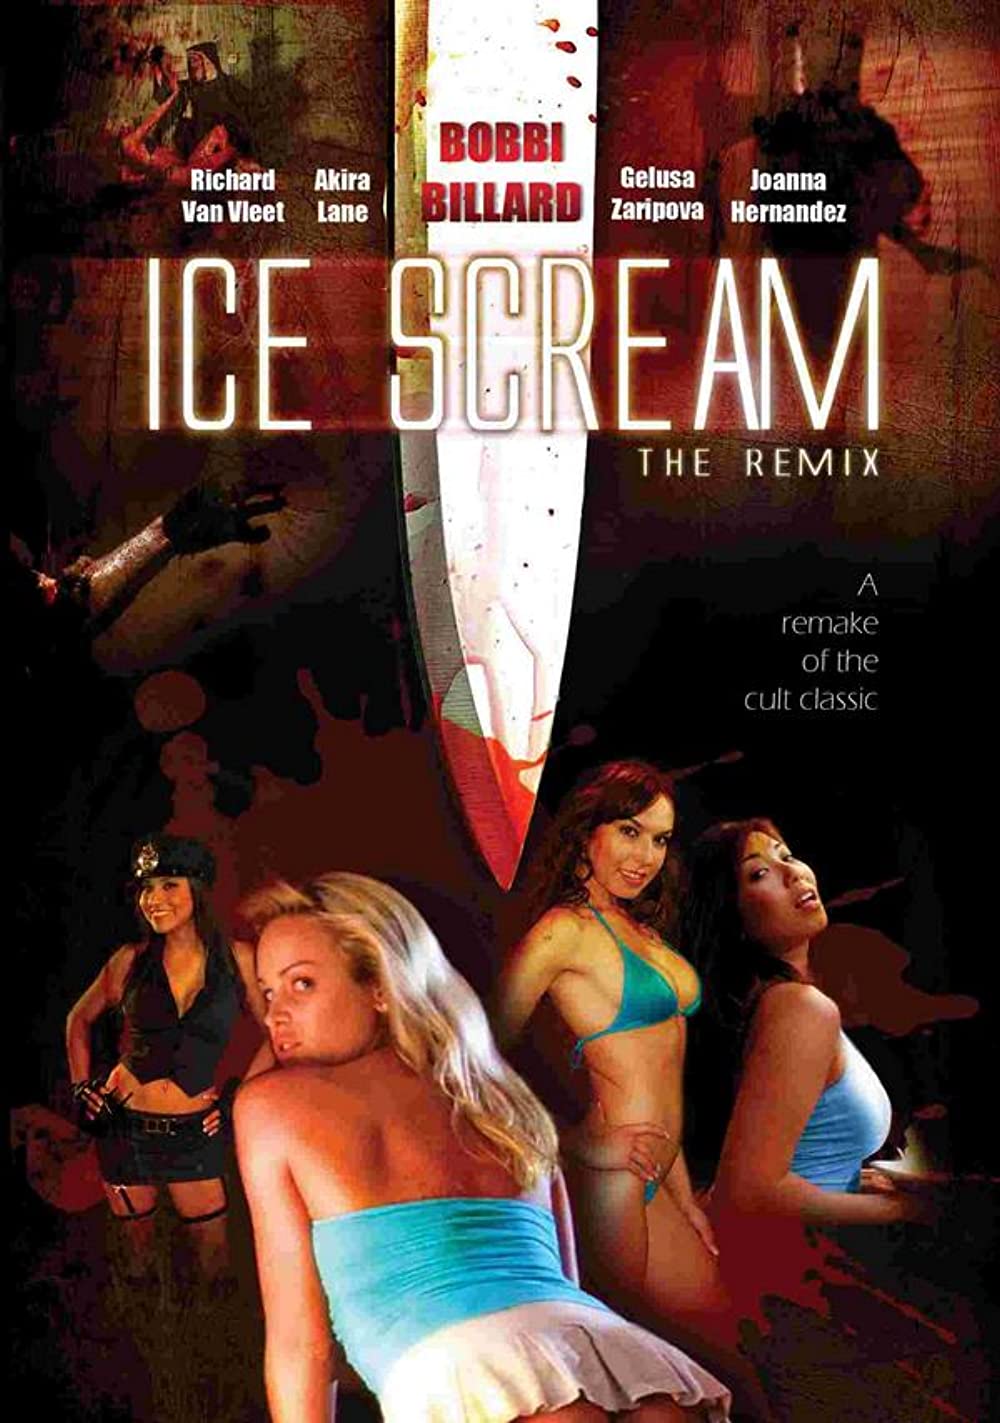 Download Ice Scream: The ReMix Movie | Ice Scream: The Remix Movie Review